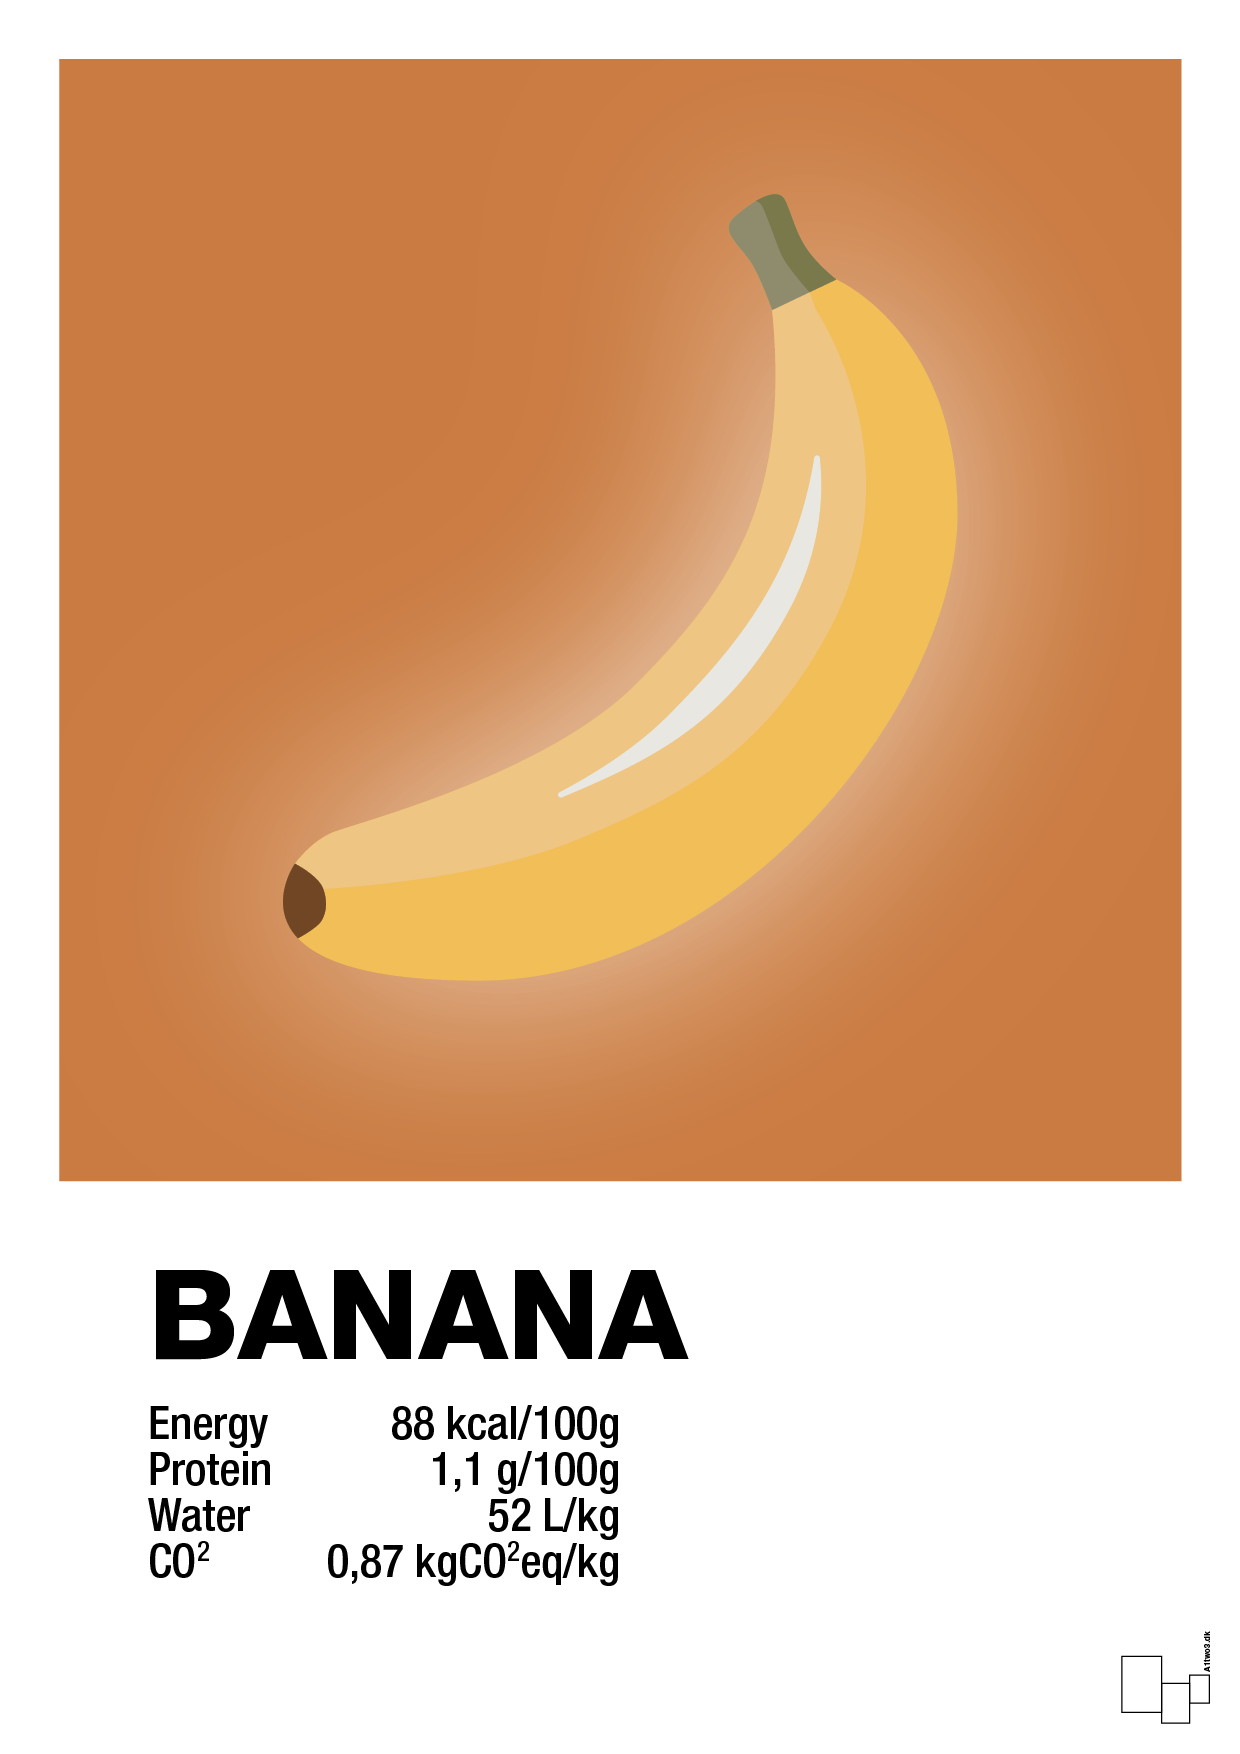 banana nutrition og miljø - Plakat med Mad & Drikke i Rumba Orange